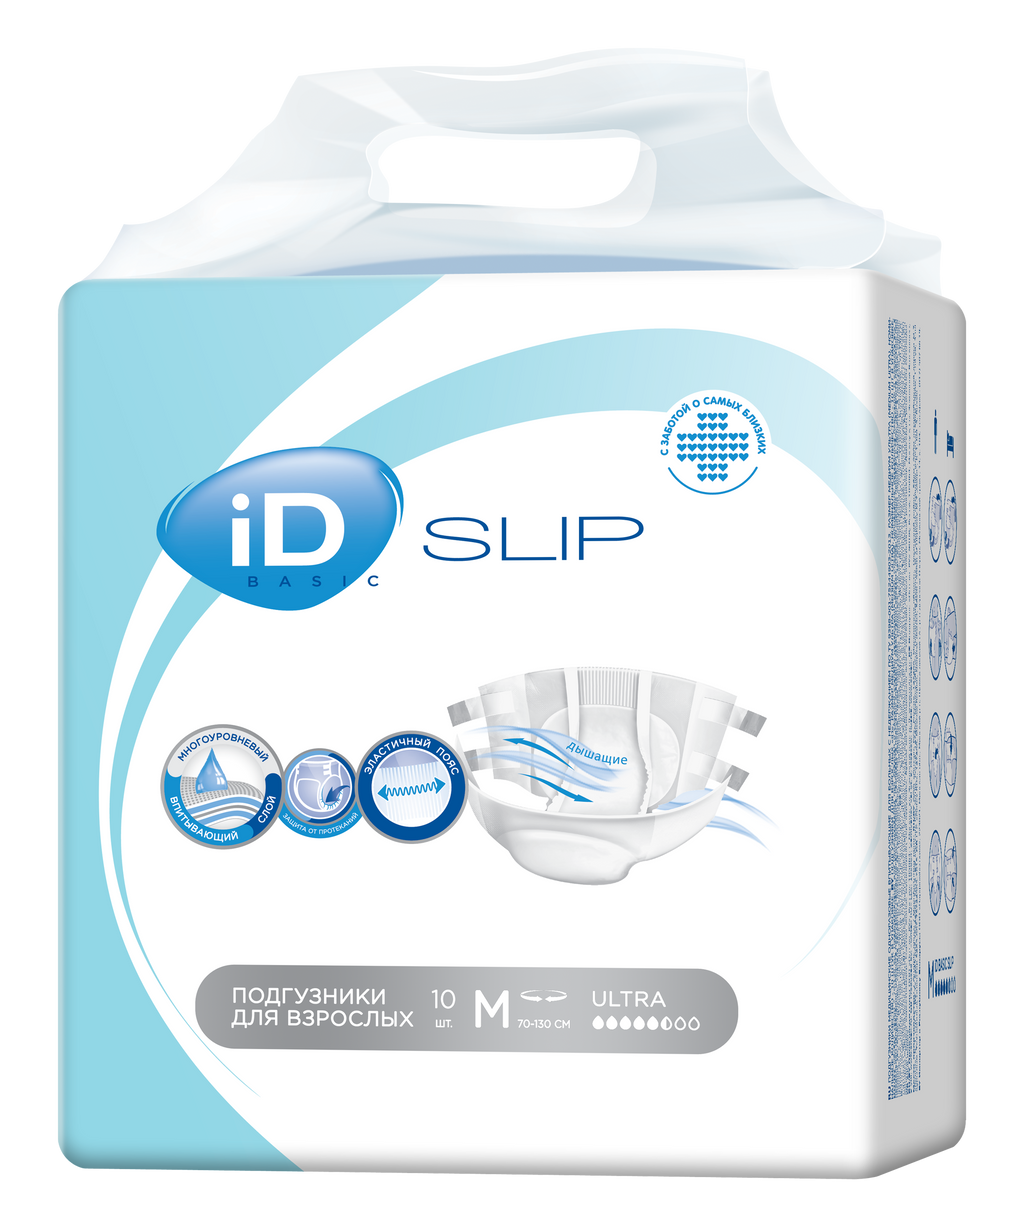 фото упаковки iD Slip Basic Ultra Подгузники для взрослых